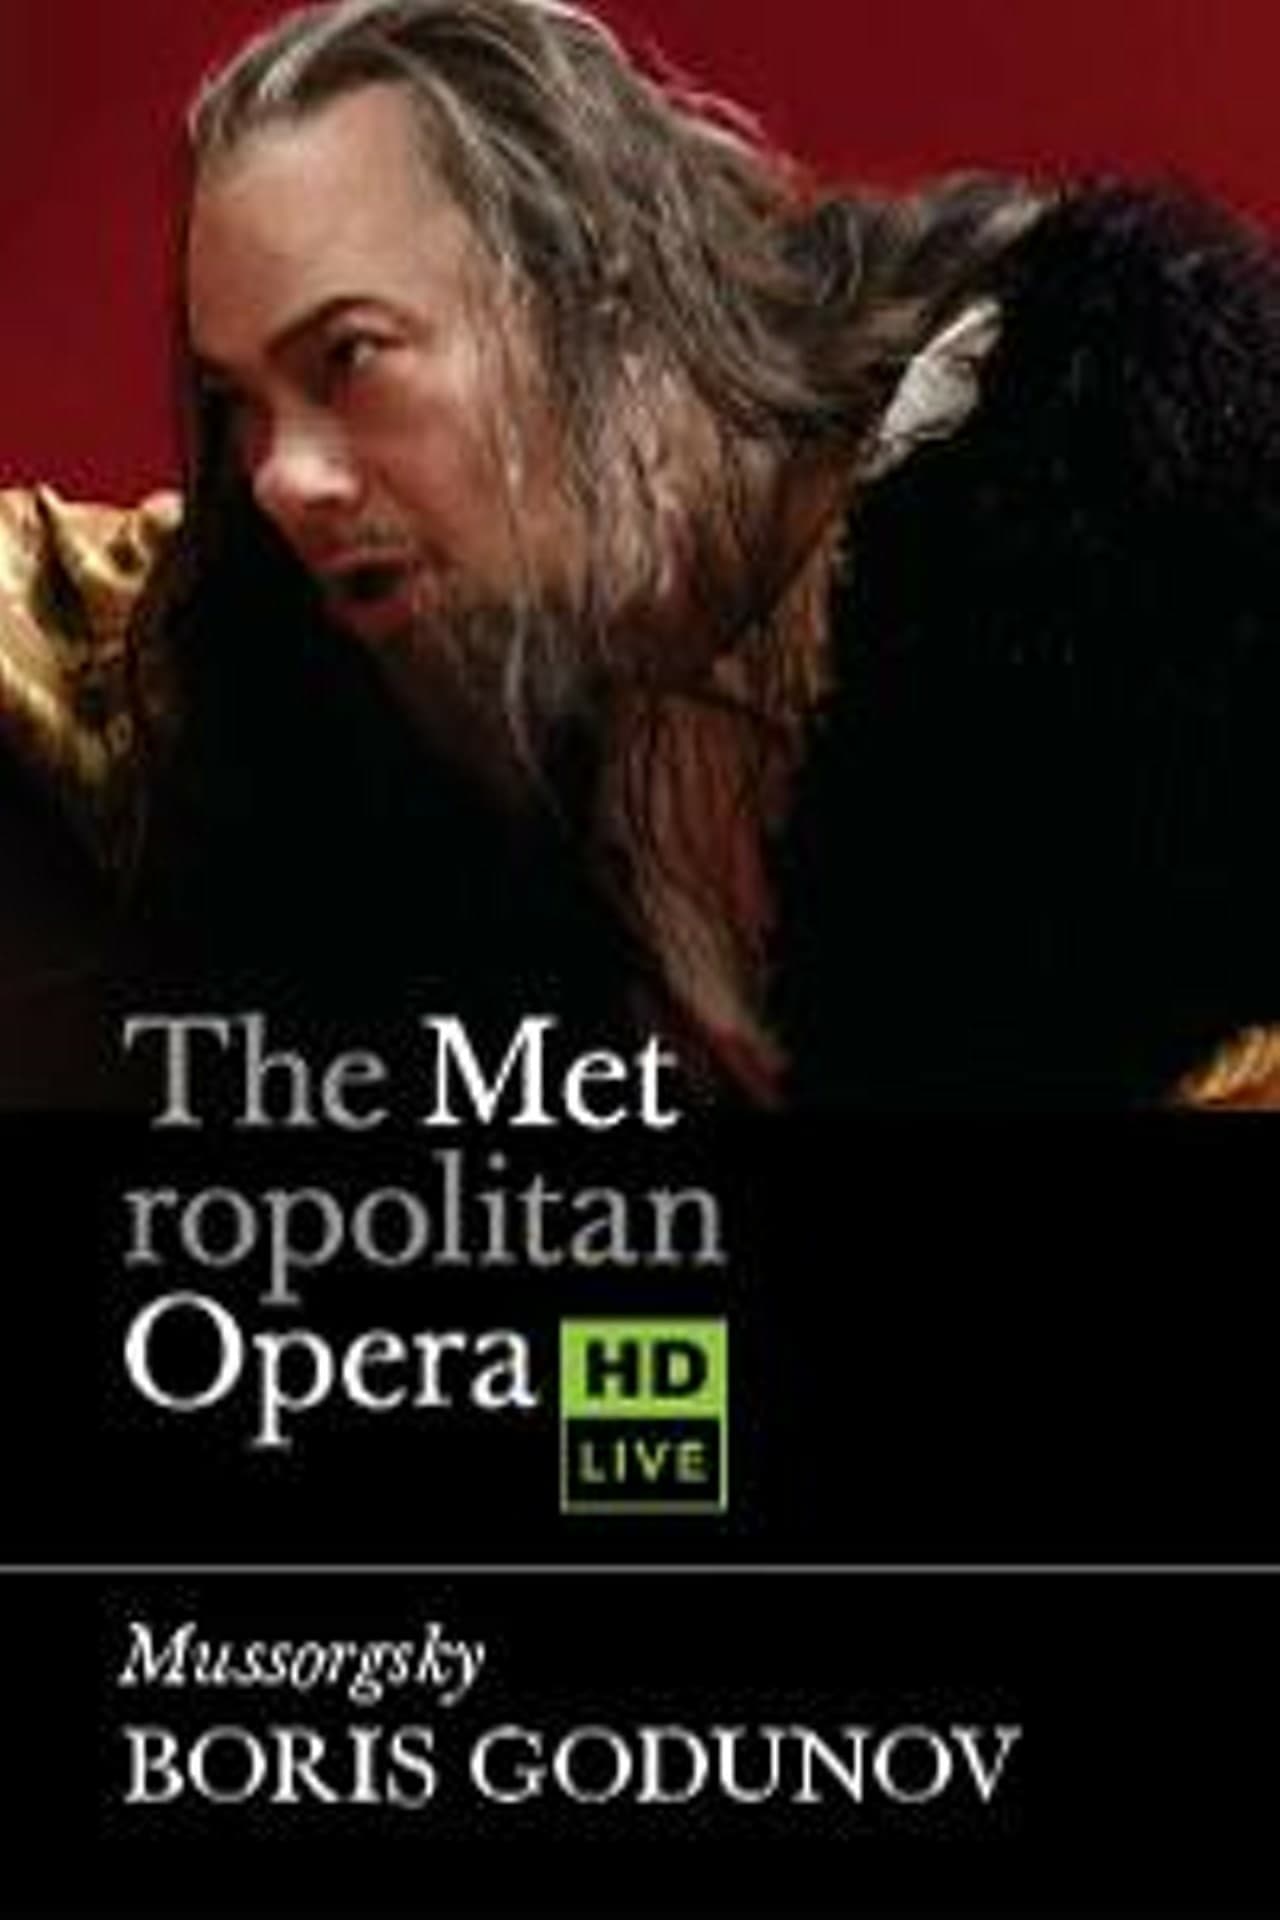 Boris Godounov [The Metropolitan Opera]